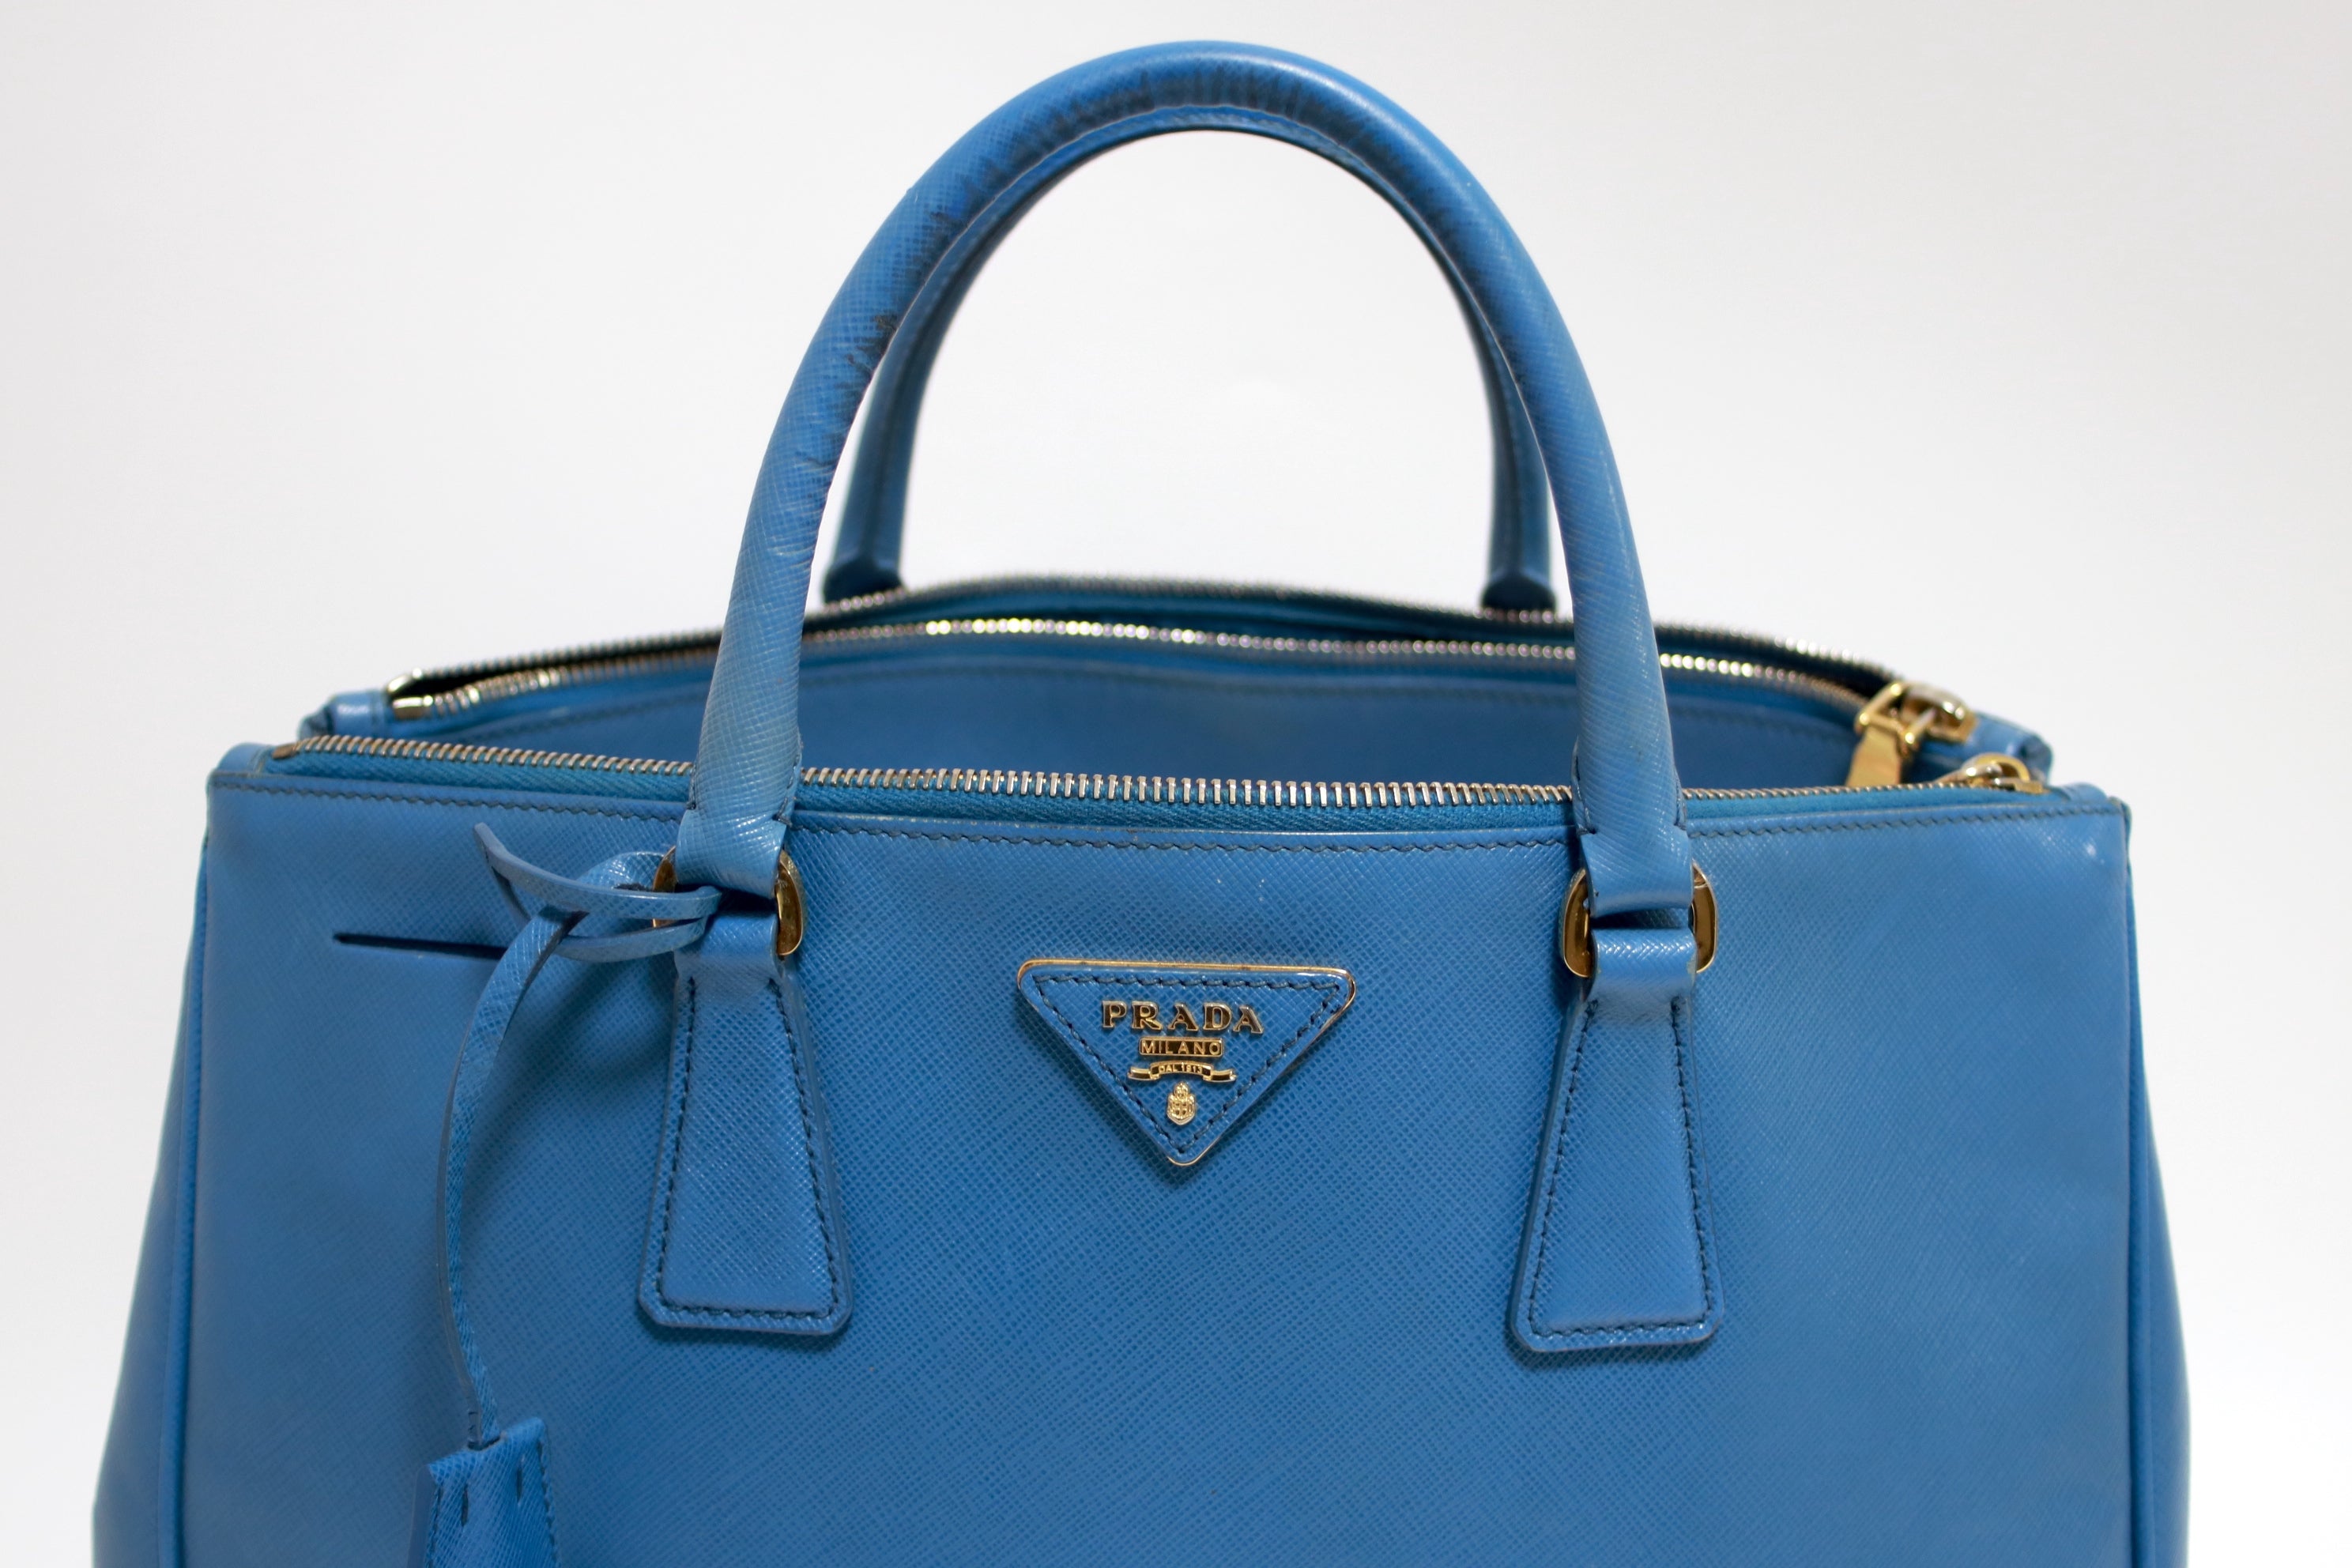 Prada Saffiano Tote Bag Blue Used (6984)